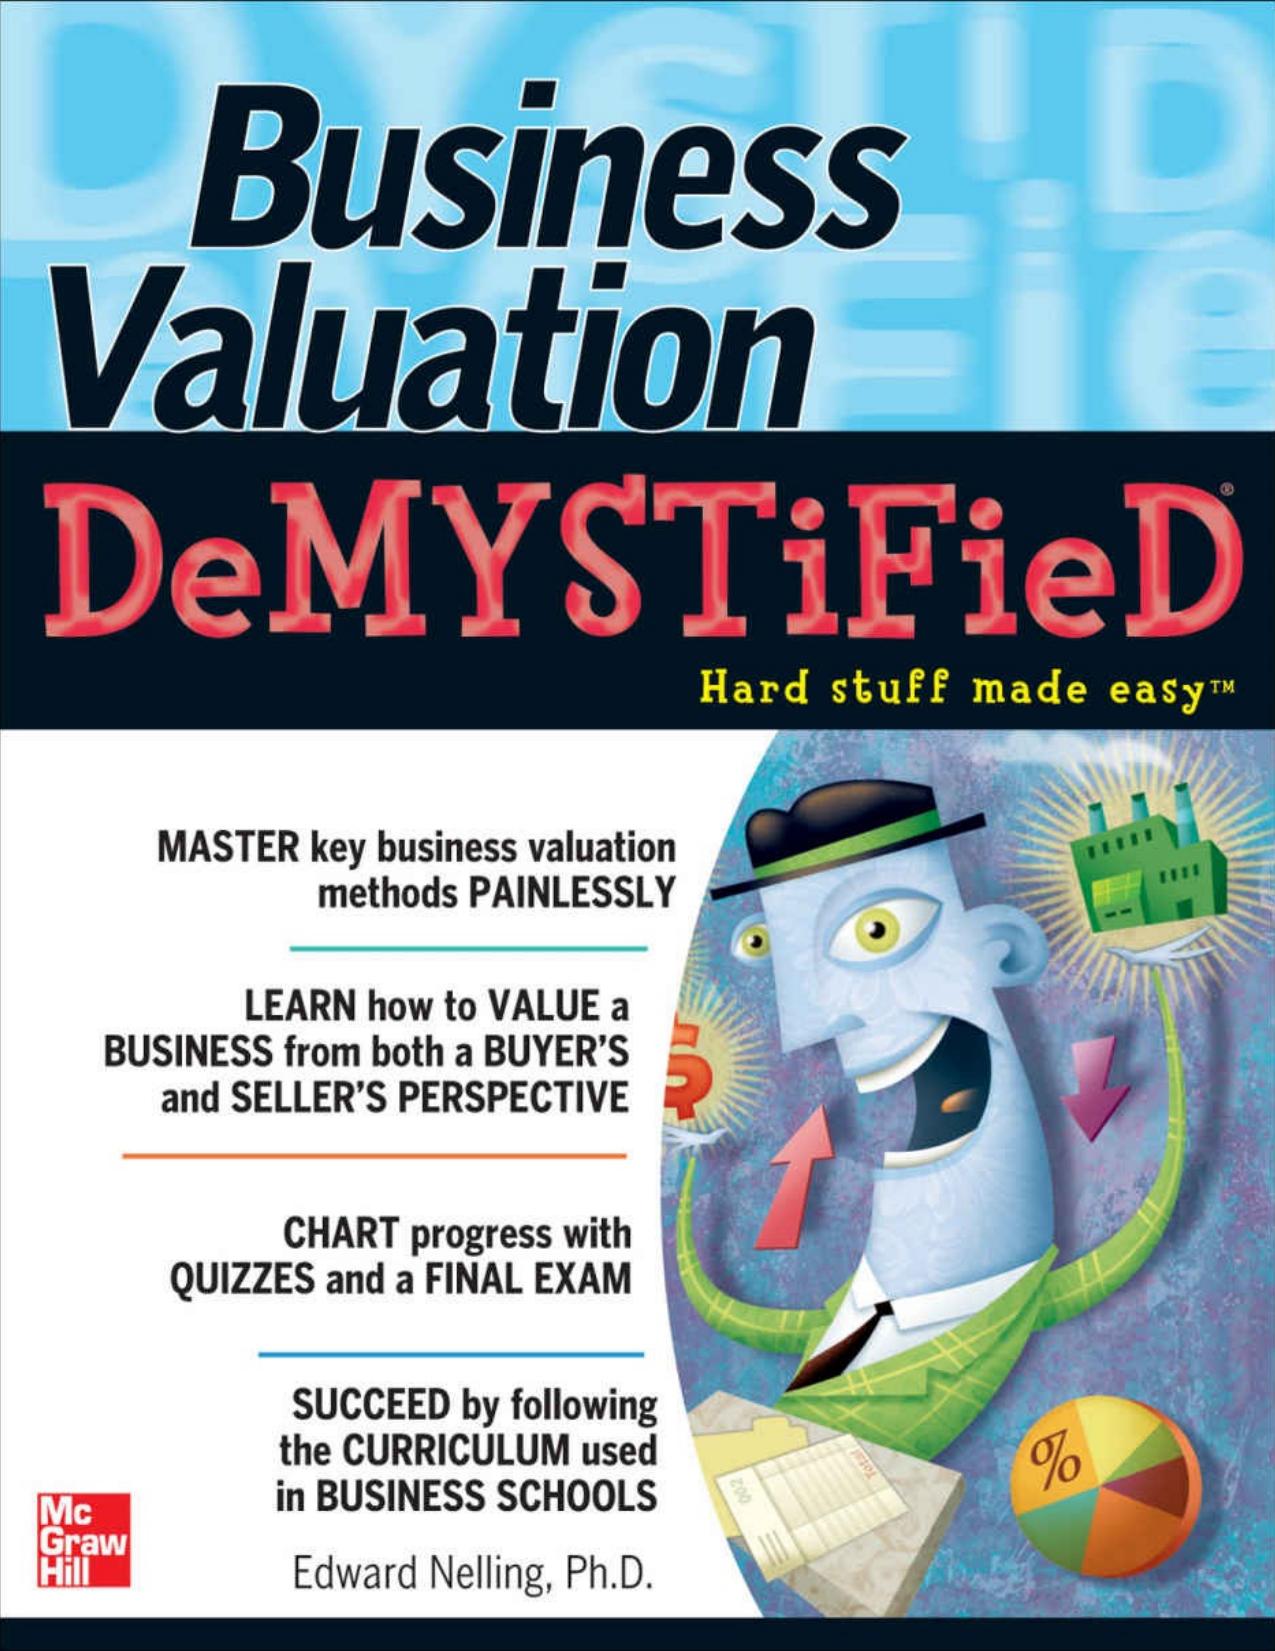 Business Valuation Demystified - Edward Nelling.jpg